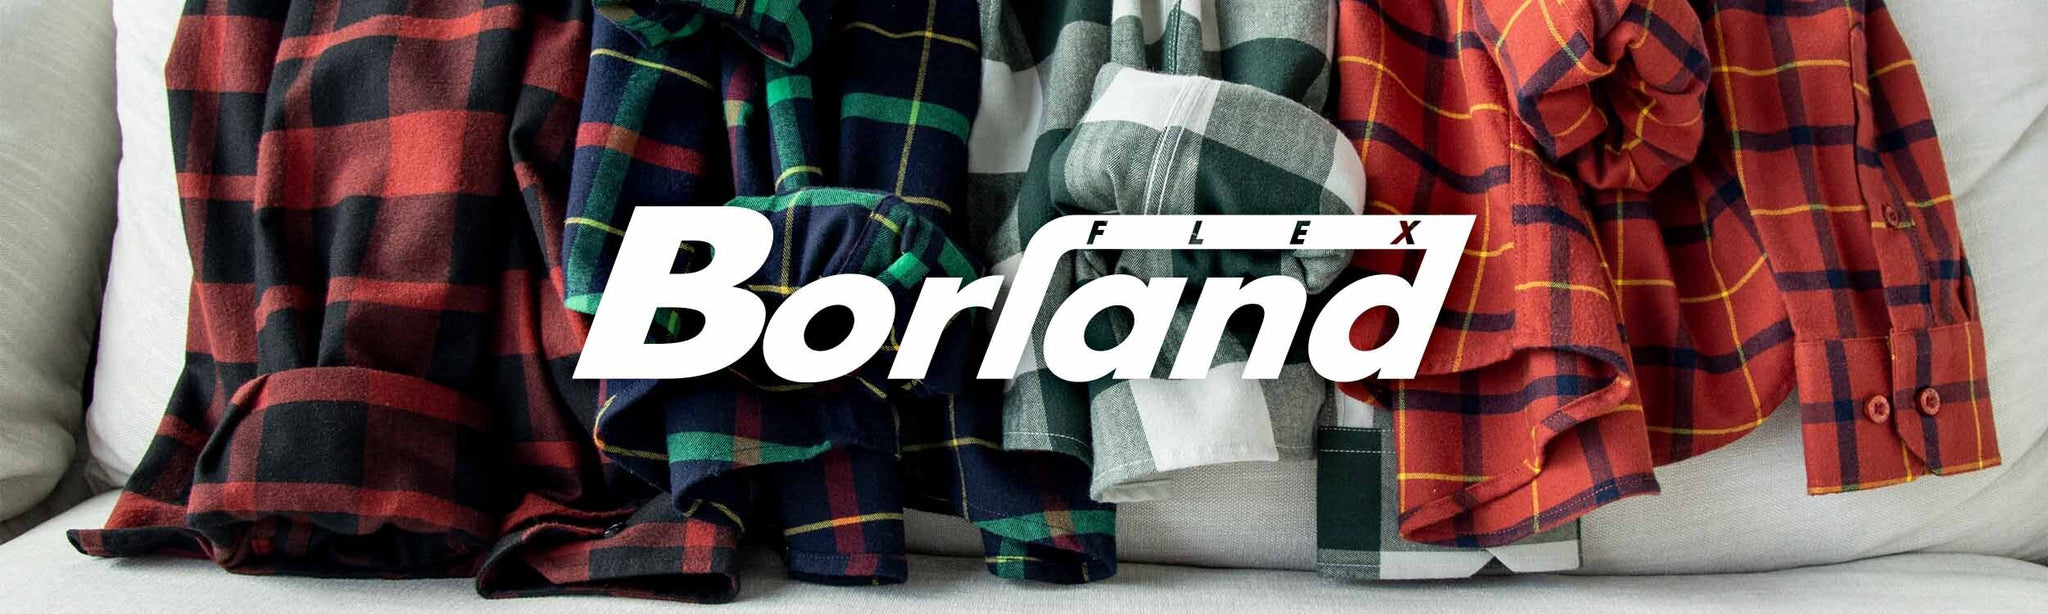 the borland flex flannel shirts for men